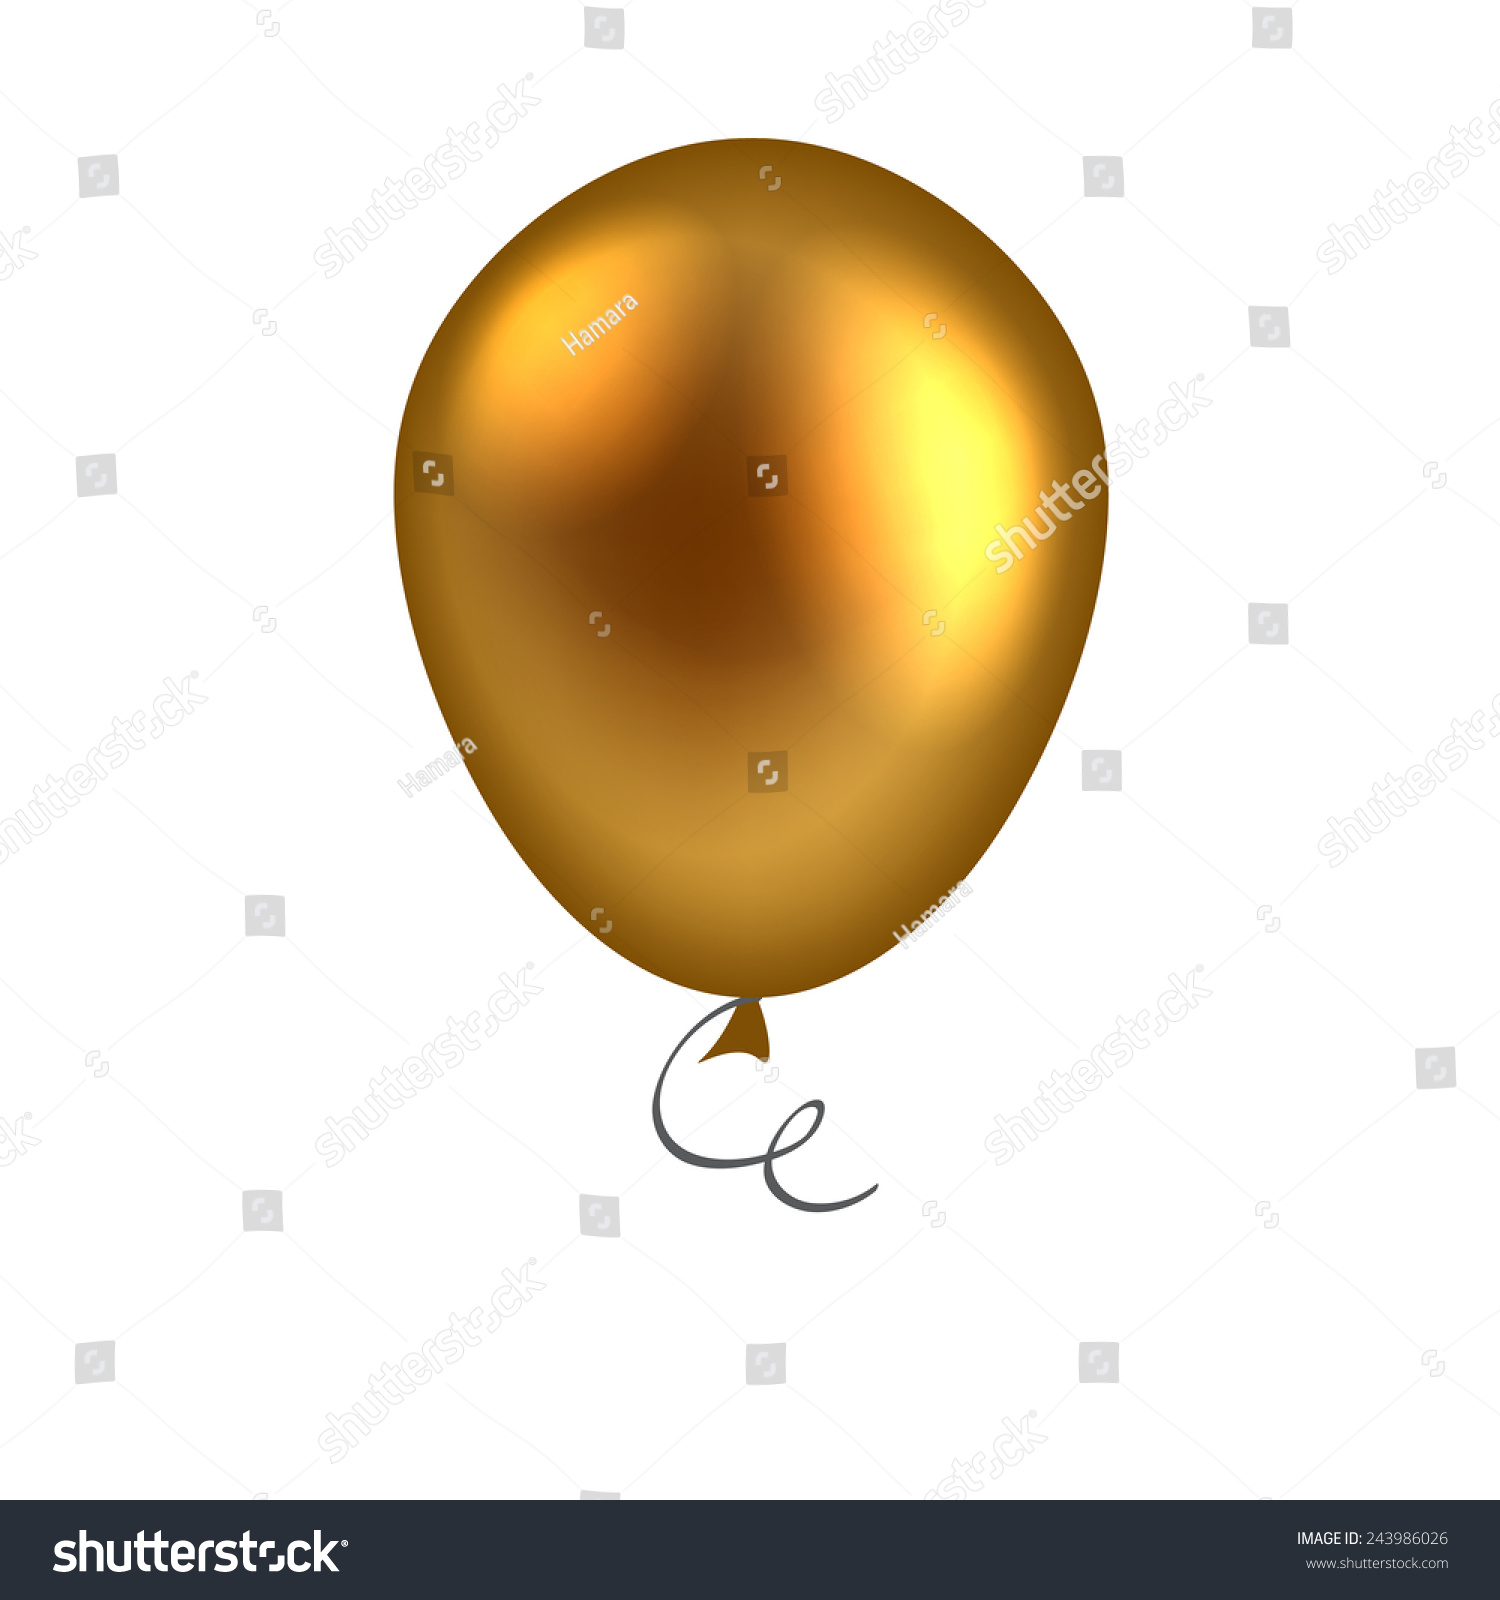 Golden Balloon Isolated On White Background. Eps10 Vector. - 243986026